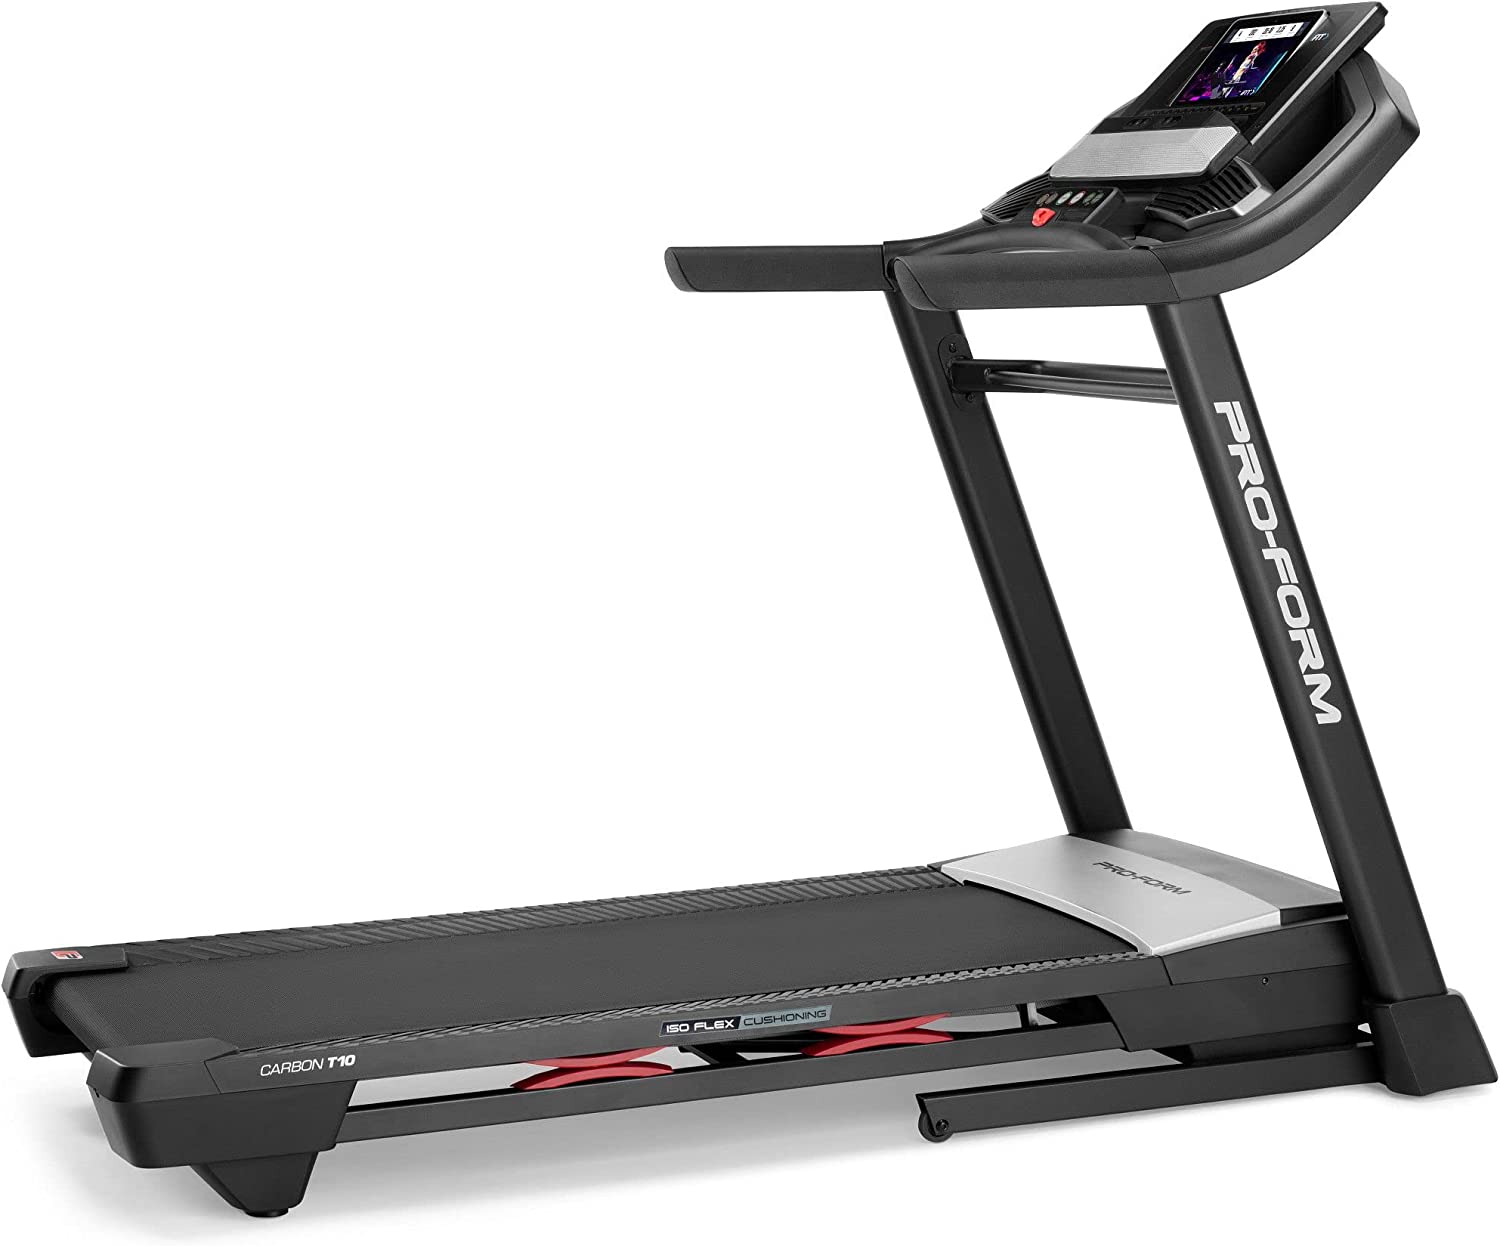 ProForm Carbon T10 Smart Treadmill (black) $700 + Free Shipping